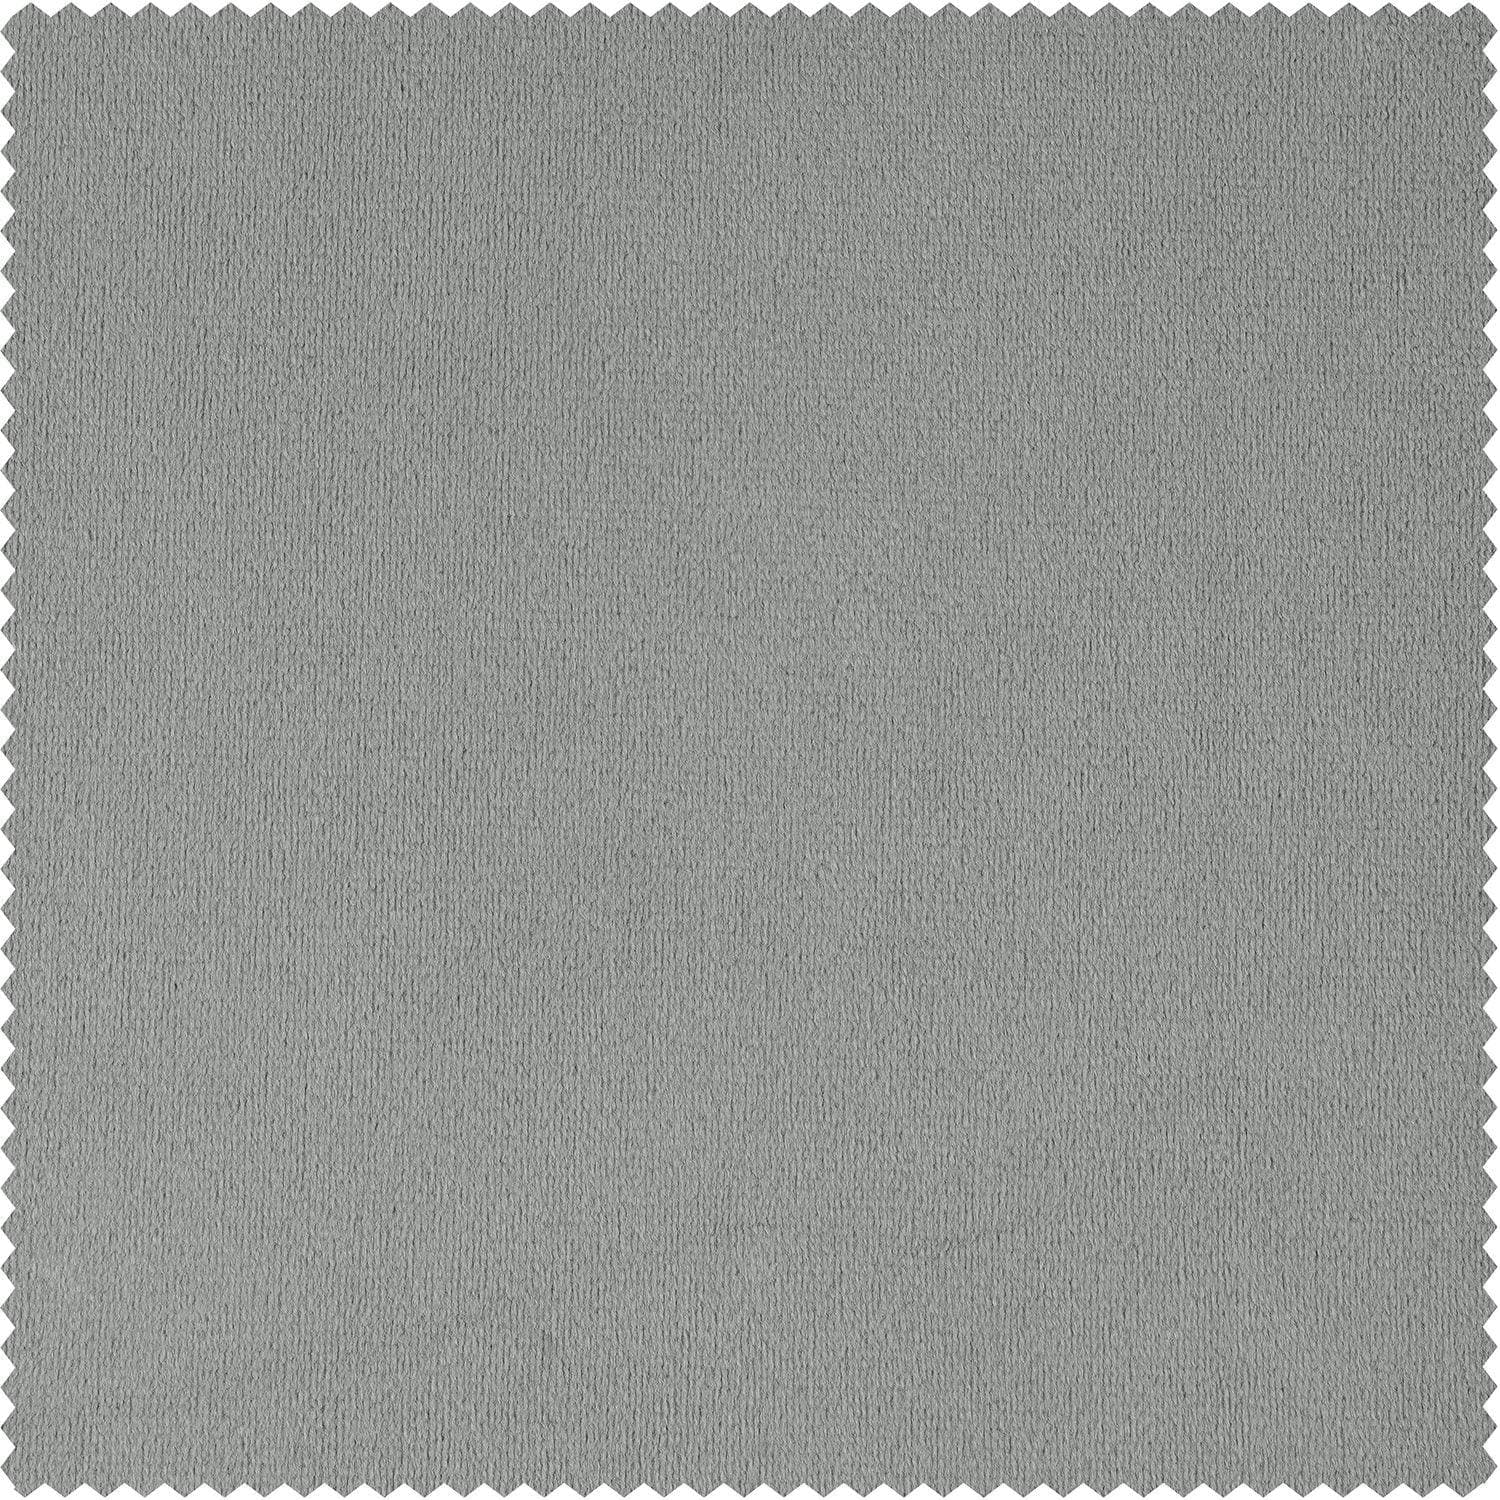 Silver Grey Signature Velvet Cushion Covers - Pair